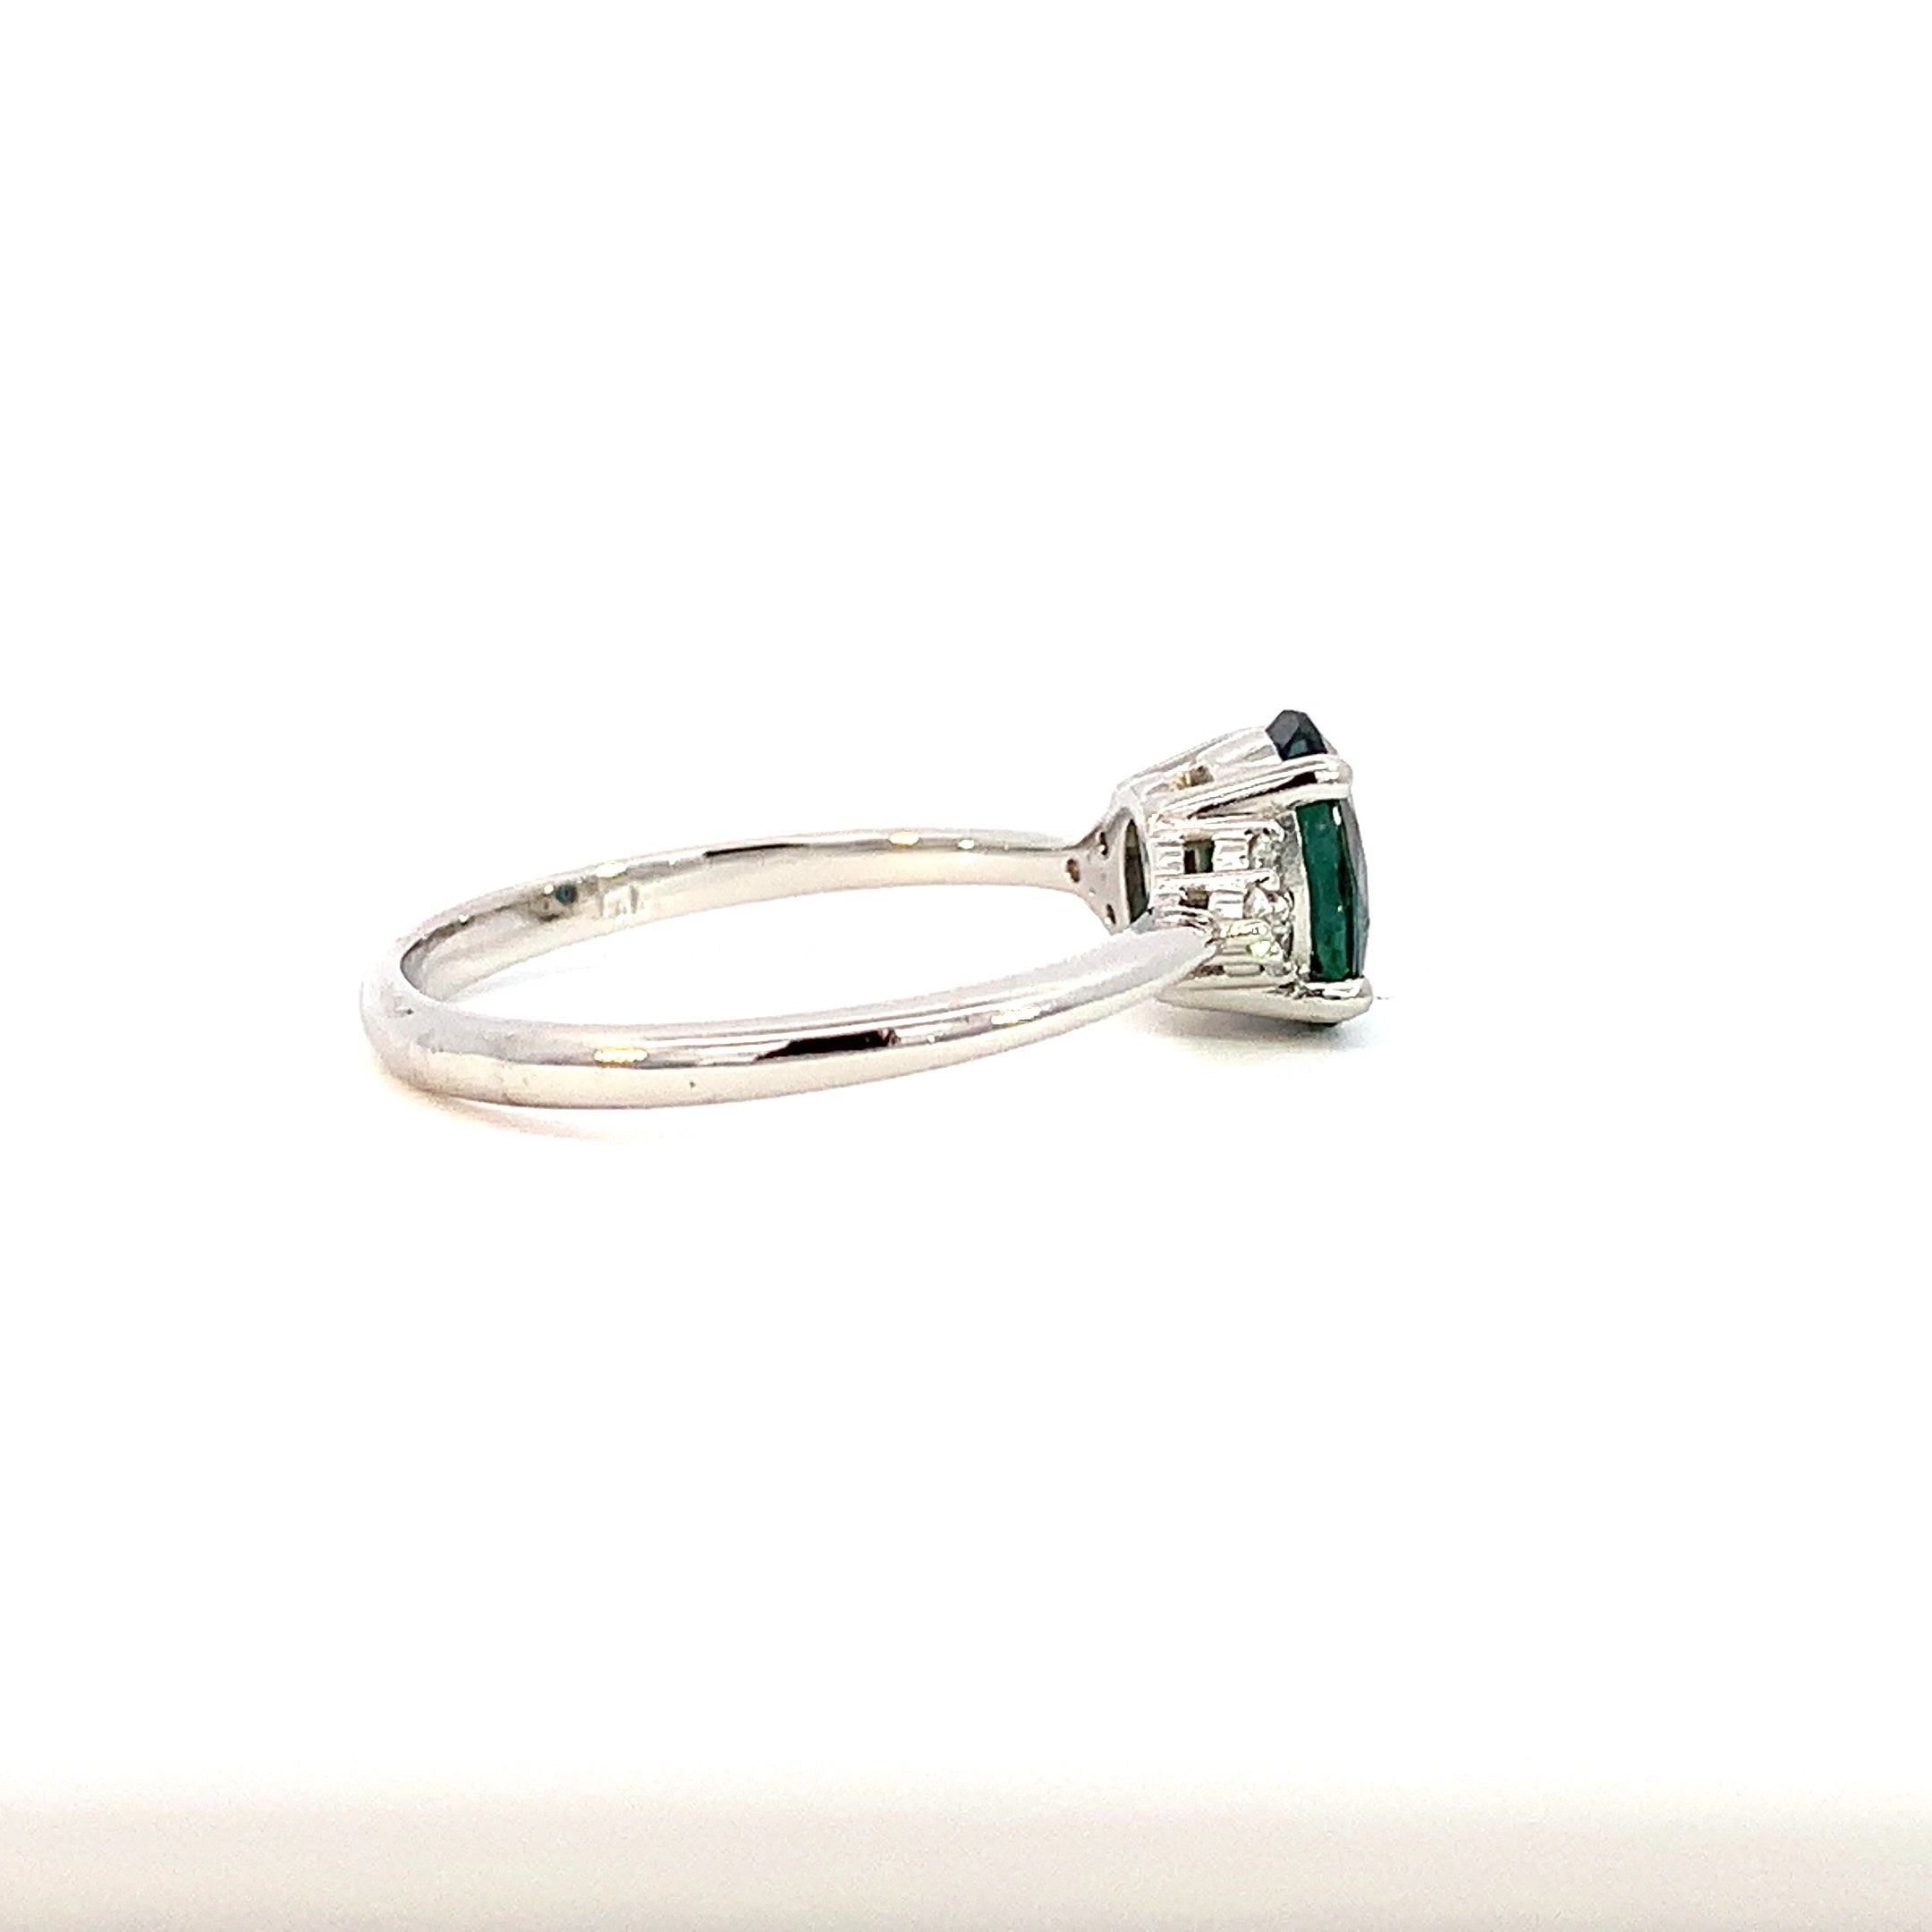 Platinum Teal sapphire 1.18ct and diamond ring - Masterpiece Jewellery Opal & Gems Sydney Australia | Online Shop